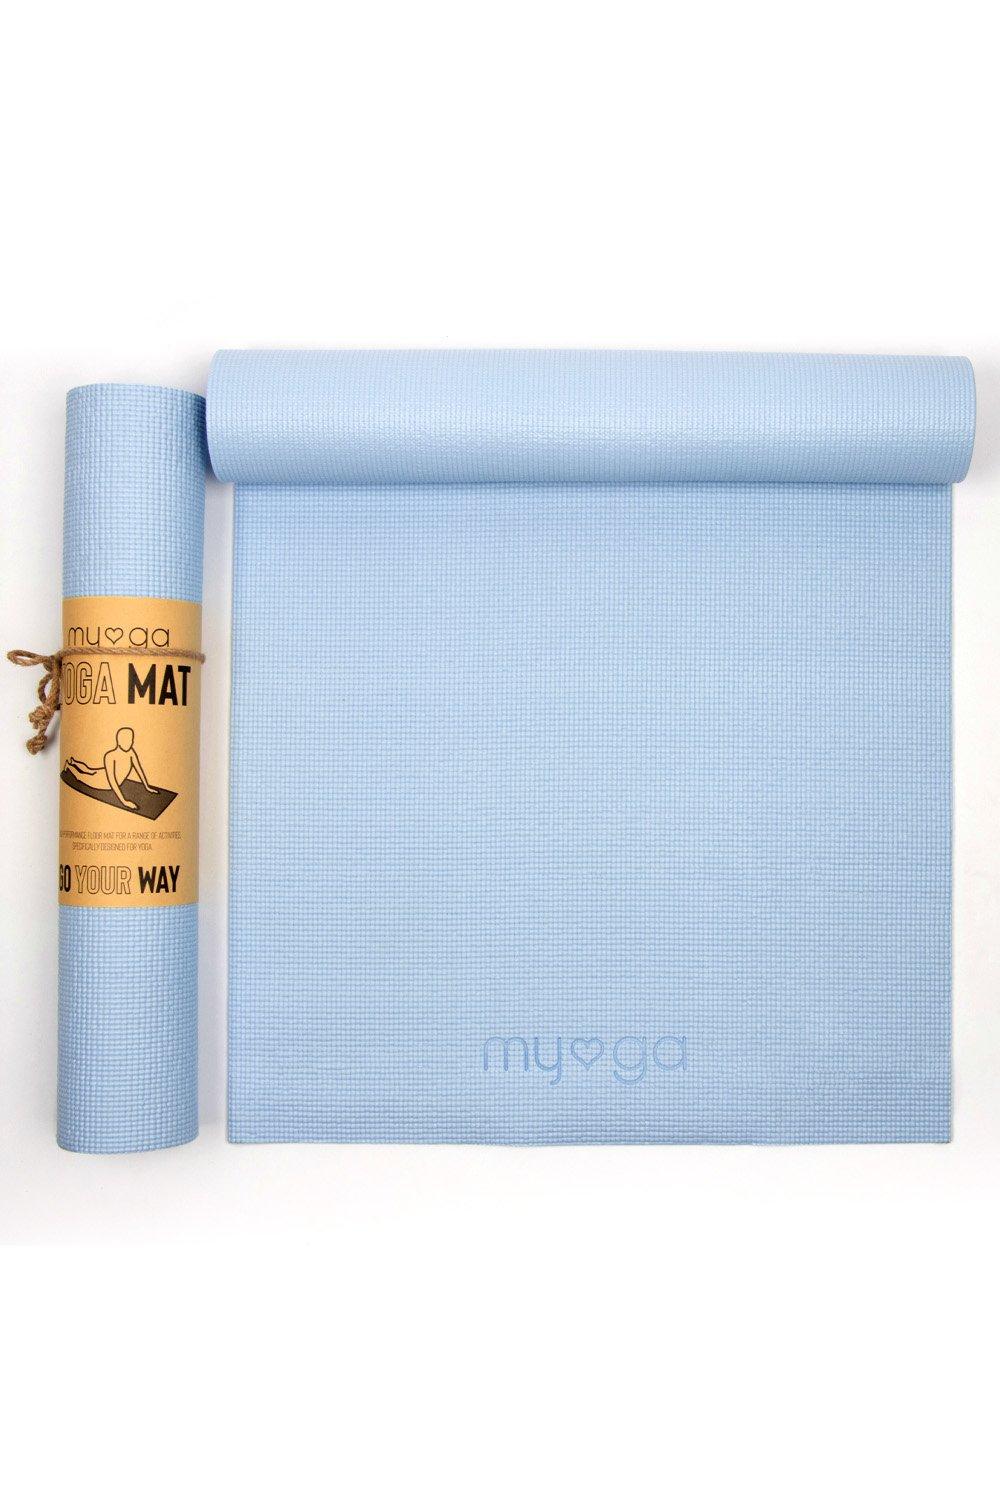 Myga Yoga Mat - Non-Slip Exercise Mat for Yoga, Pilates, Meditation &  Fitness - Lightweight Mat with Carry Strap for Travel - Royal Blue